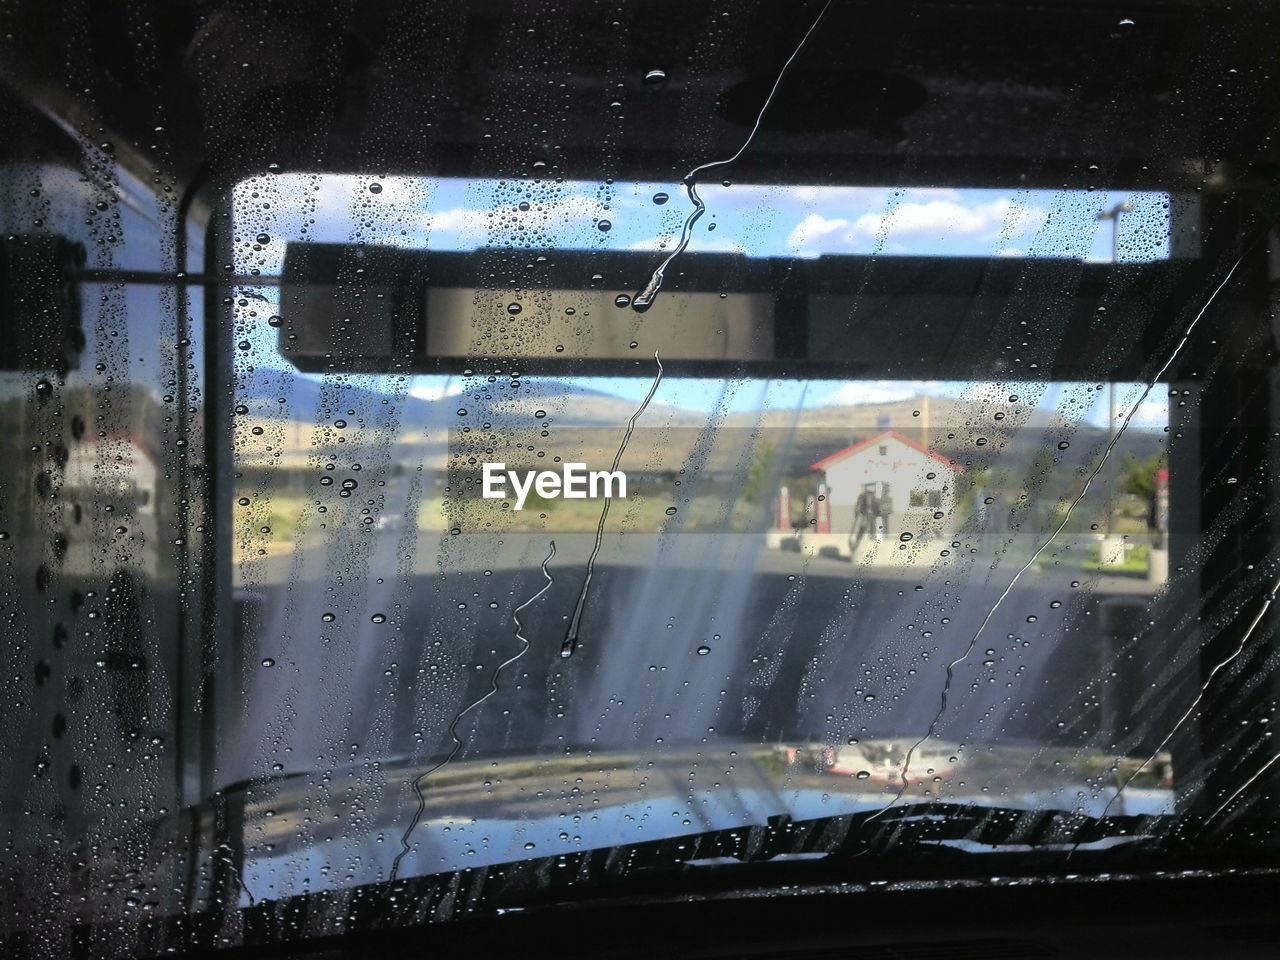 CLOSE-UP OF WET CAR WINDOW